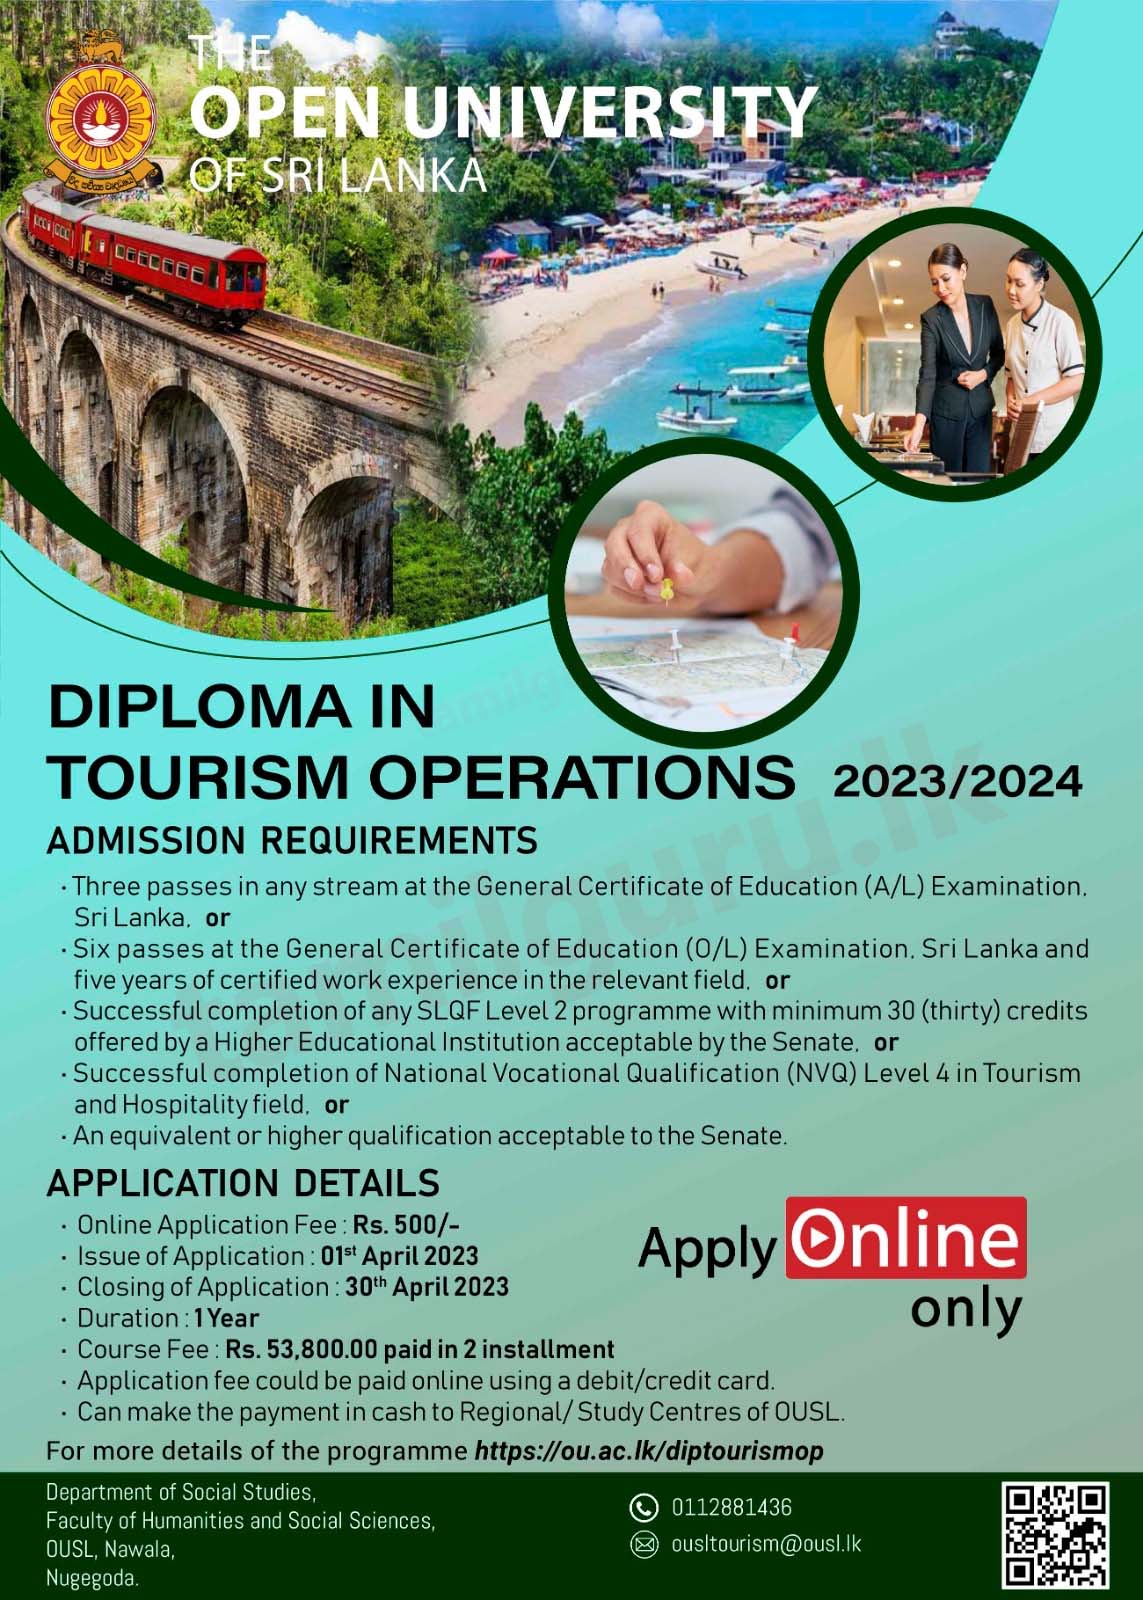 Diploma in Tourism Operations 2023 - Open University of Sri Lanka (OUSL)